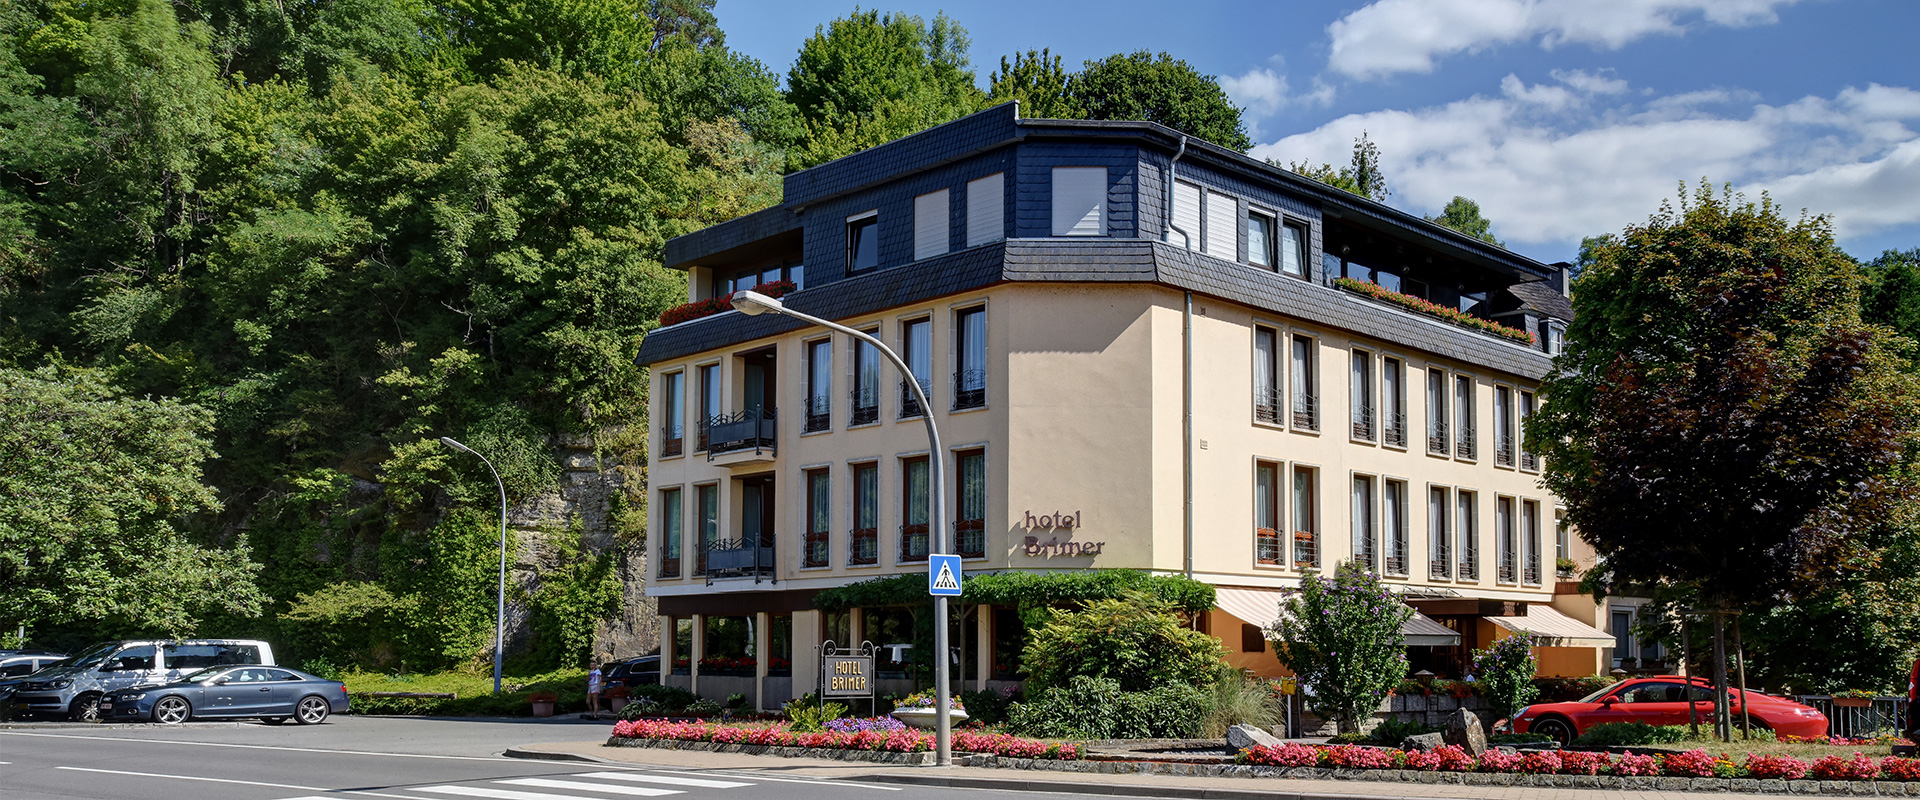 Home - Hotel Brimer